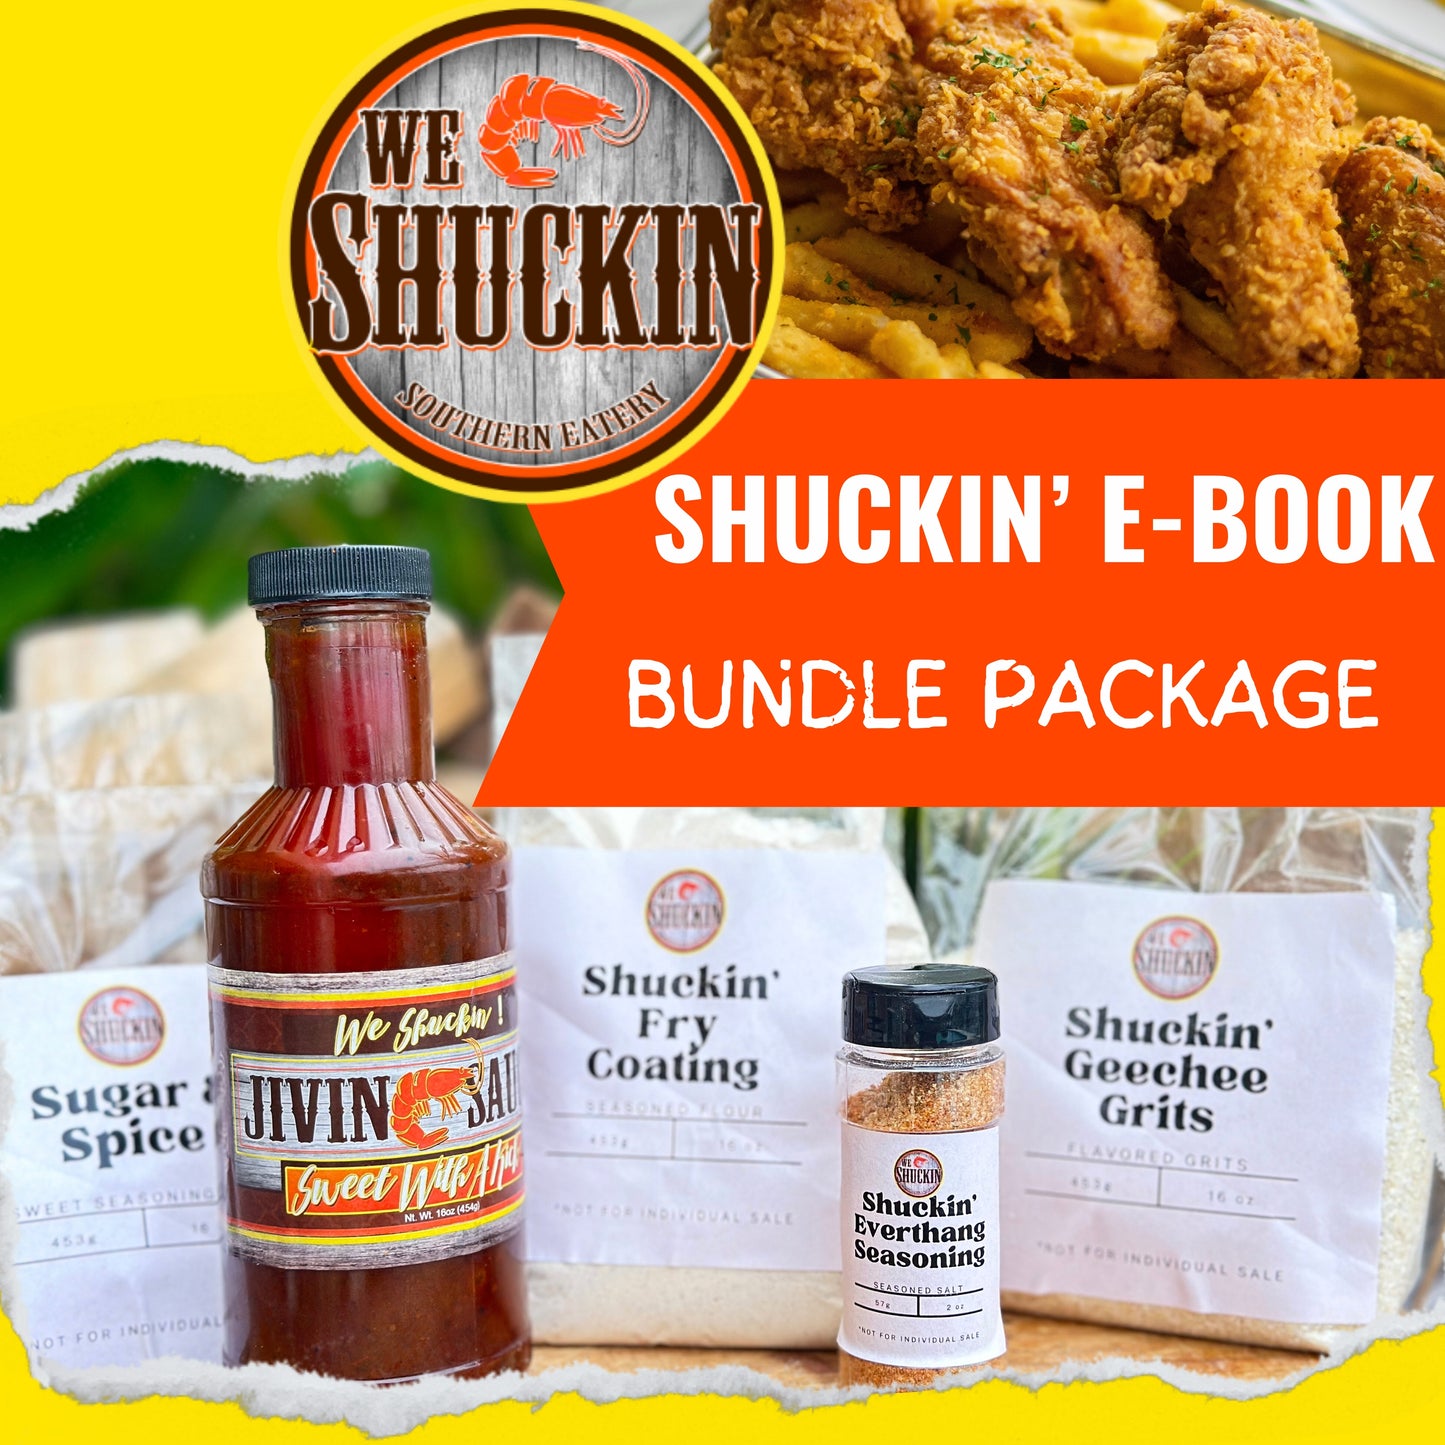 BUNDLE of Shuckin's Southern Love (Our Recipe Book) E-BOOK PRE-ORDER